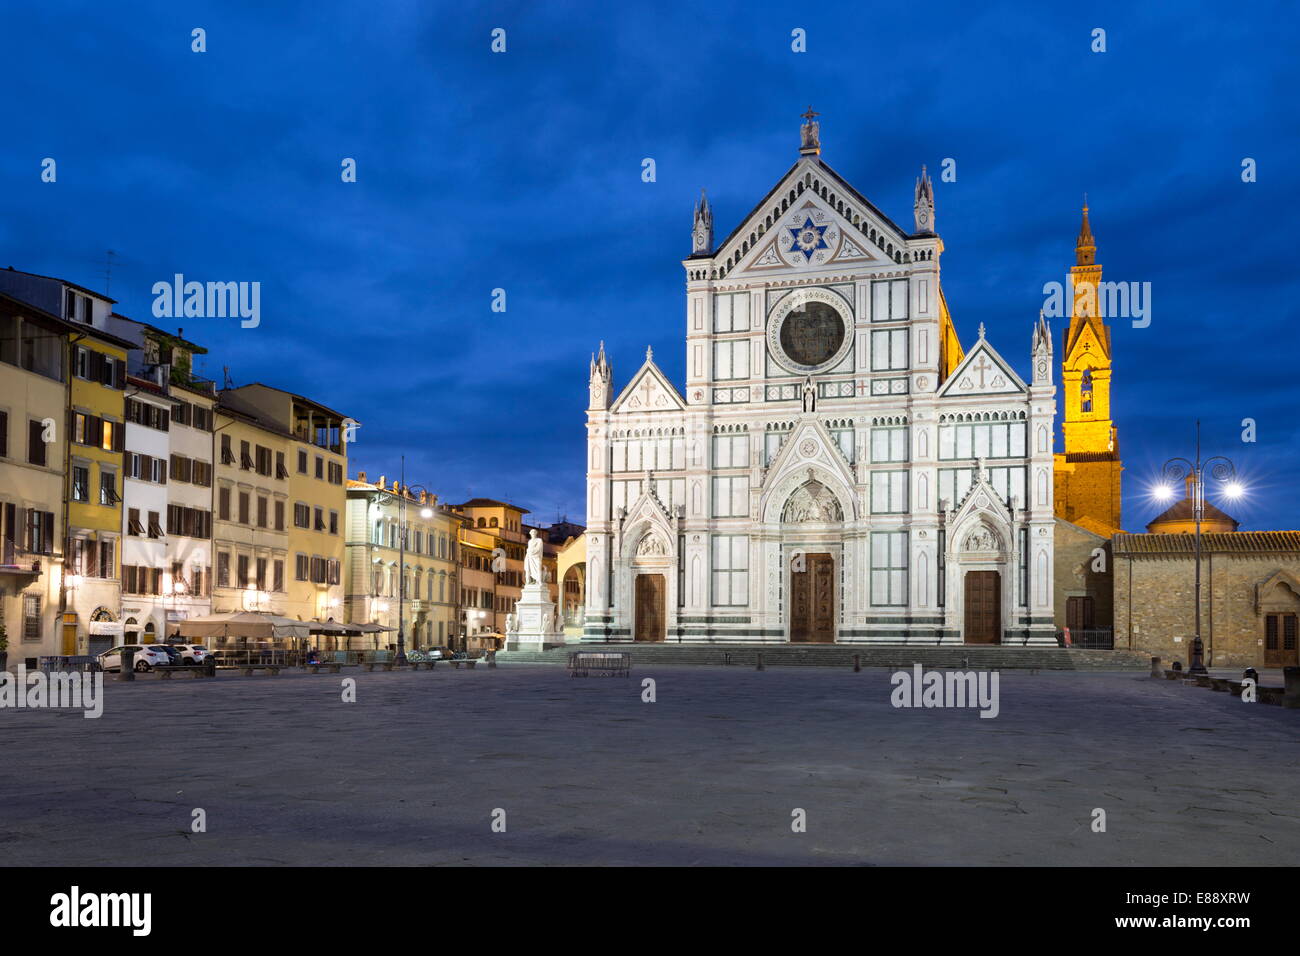 Santa Croce church at night, Piazza Santa Croce, Florence, UNESCO World Heritage Site, Tuscany, Italy, Europe Stock Photo